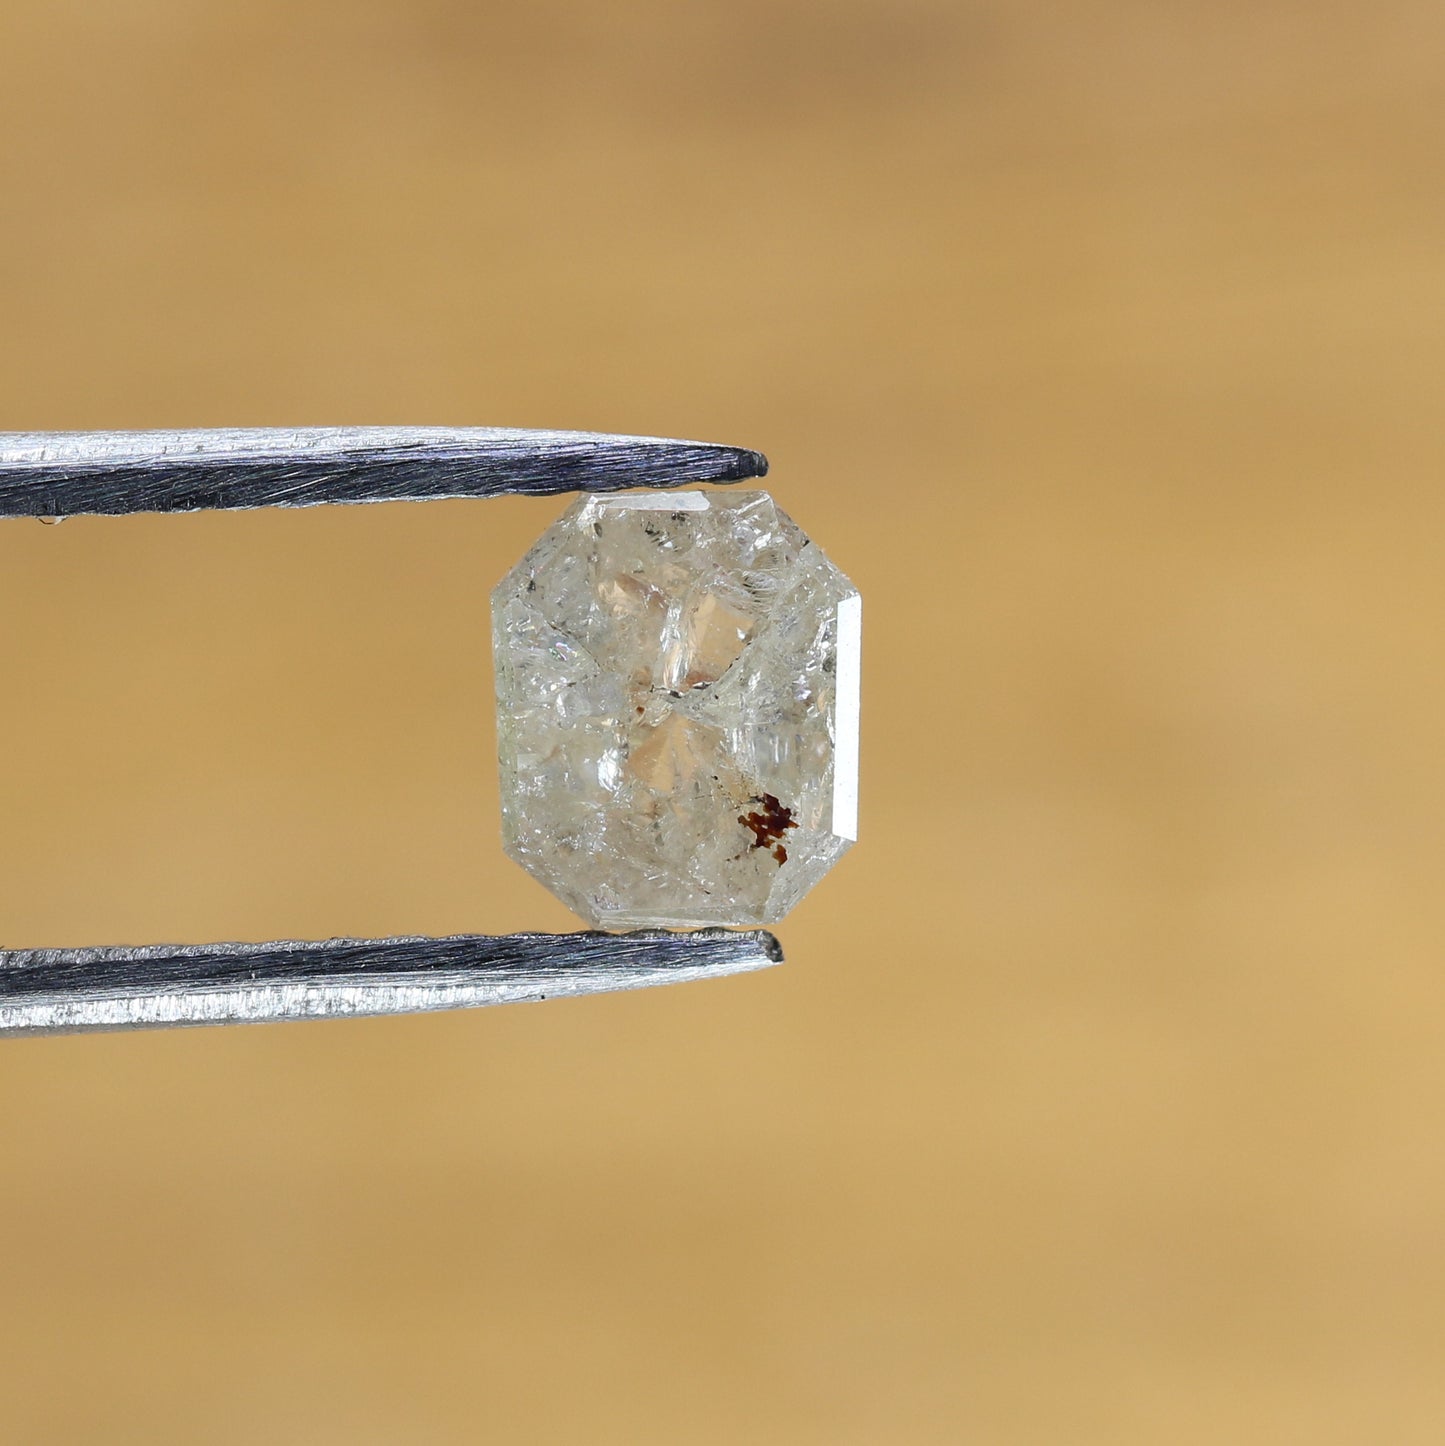 0.77 CT Light Gray Emerald Shape Diamond For Prong Set Ring | Customize Emerald Natural Loose Diamond